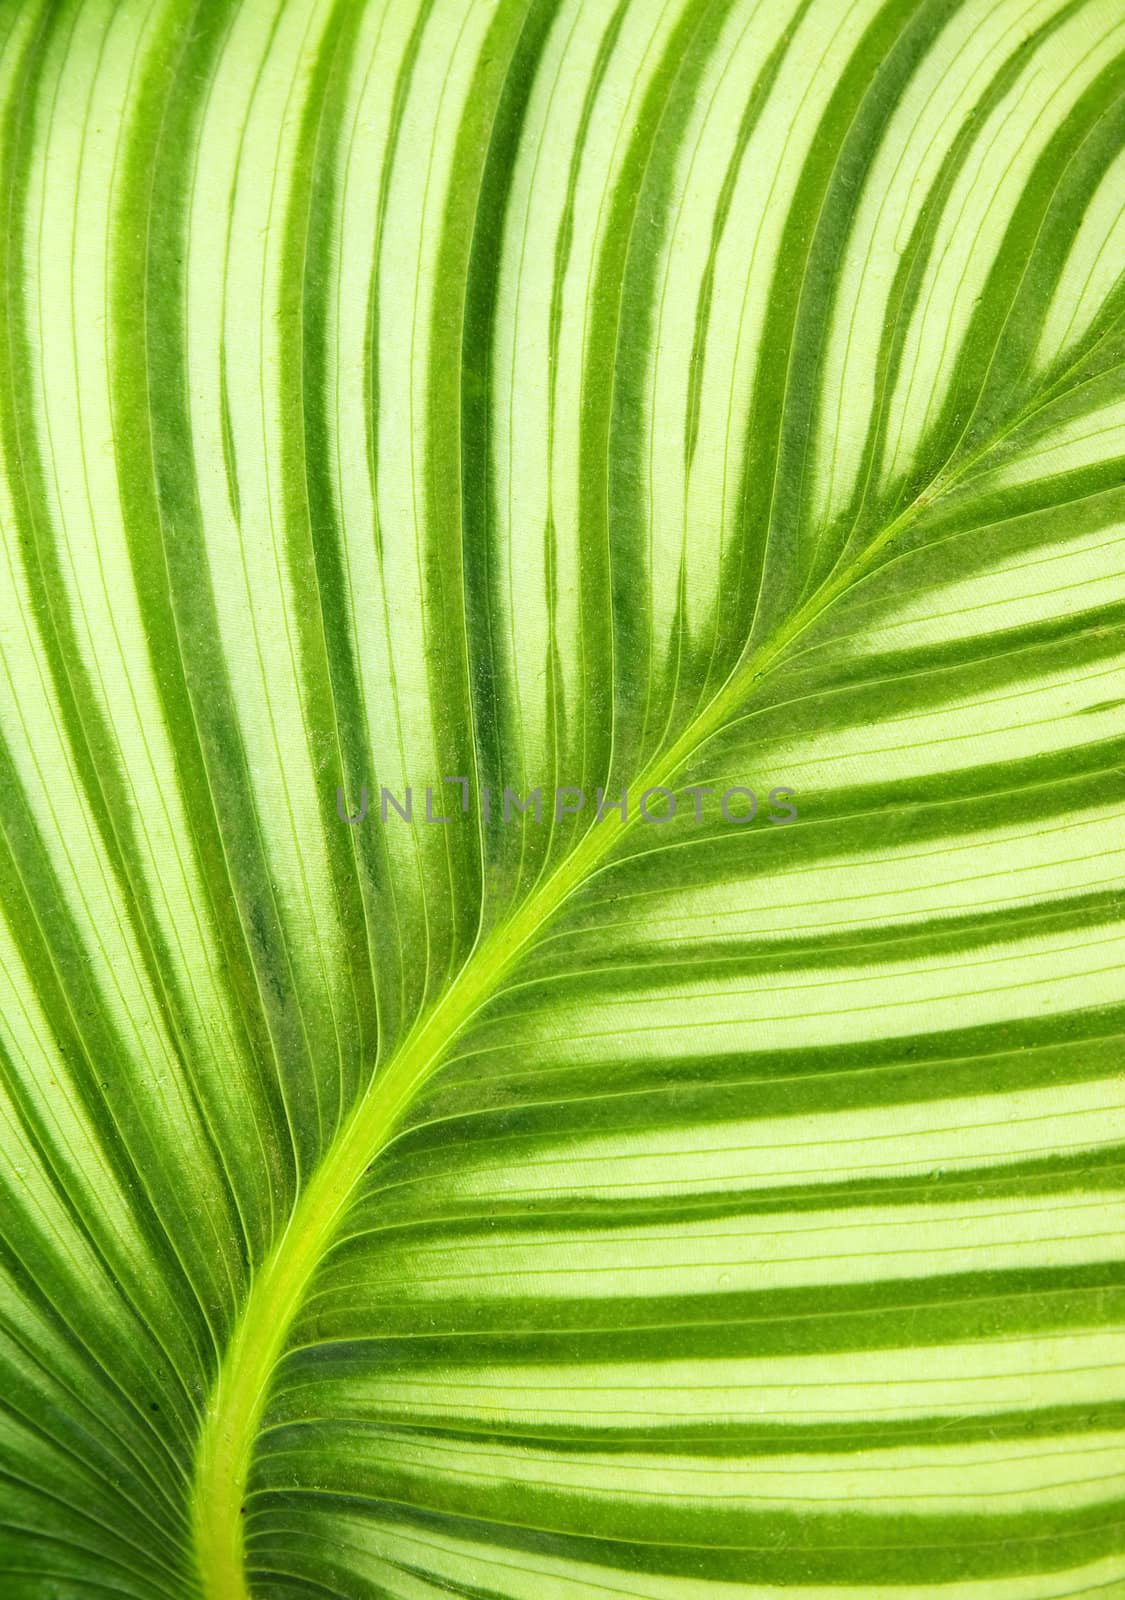 Beautiful green leaf background by Jaykayl